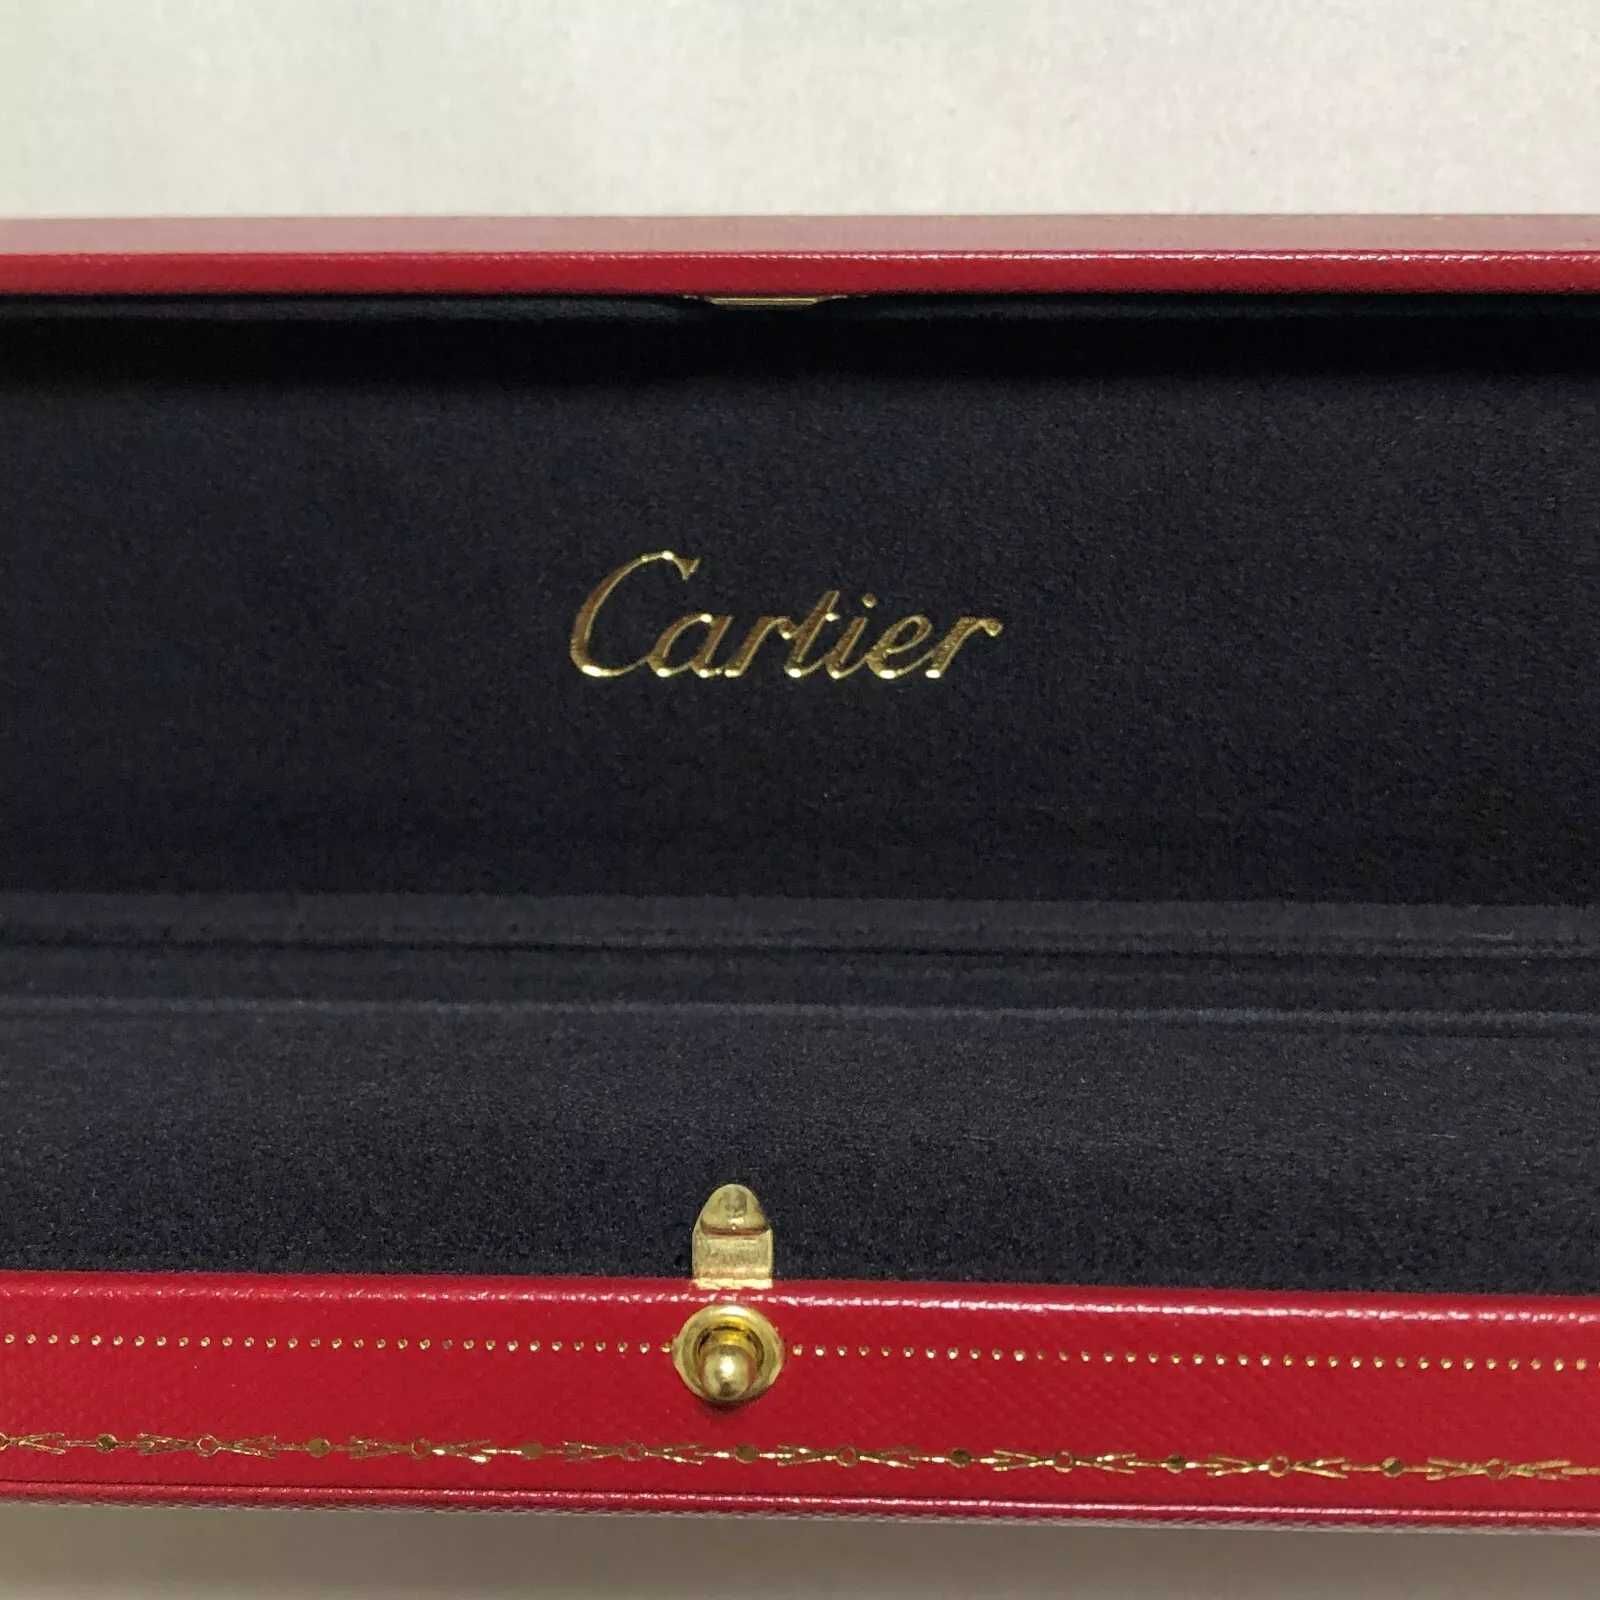 Cutie originala pre-owned Cartier pentru bratara sau lantisor